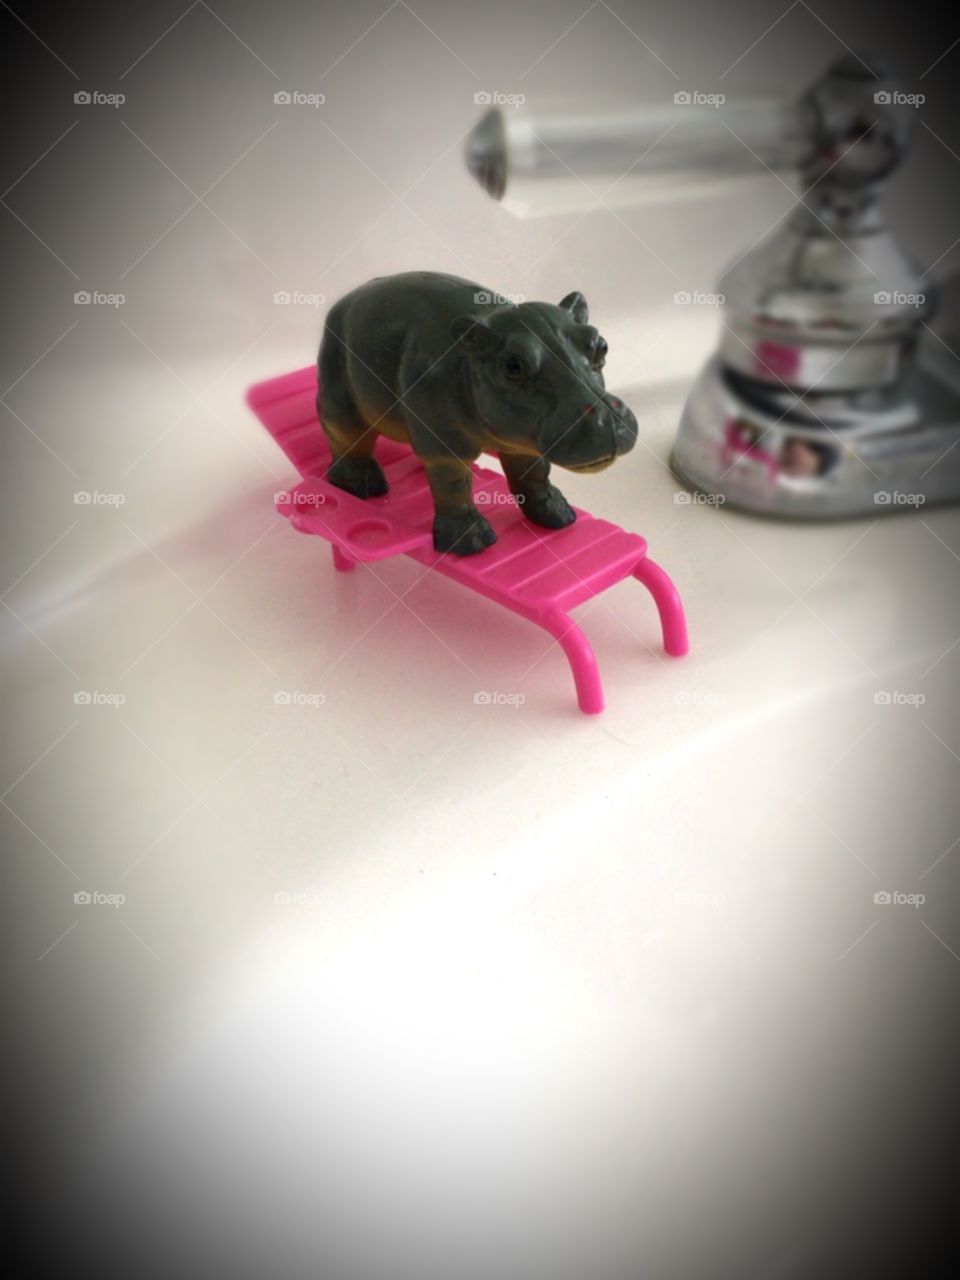 Hippo relaxing sink-side